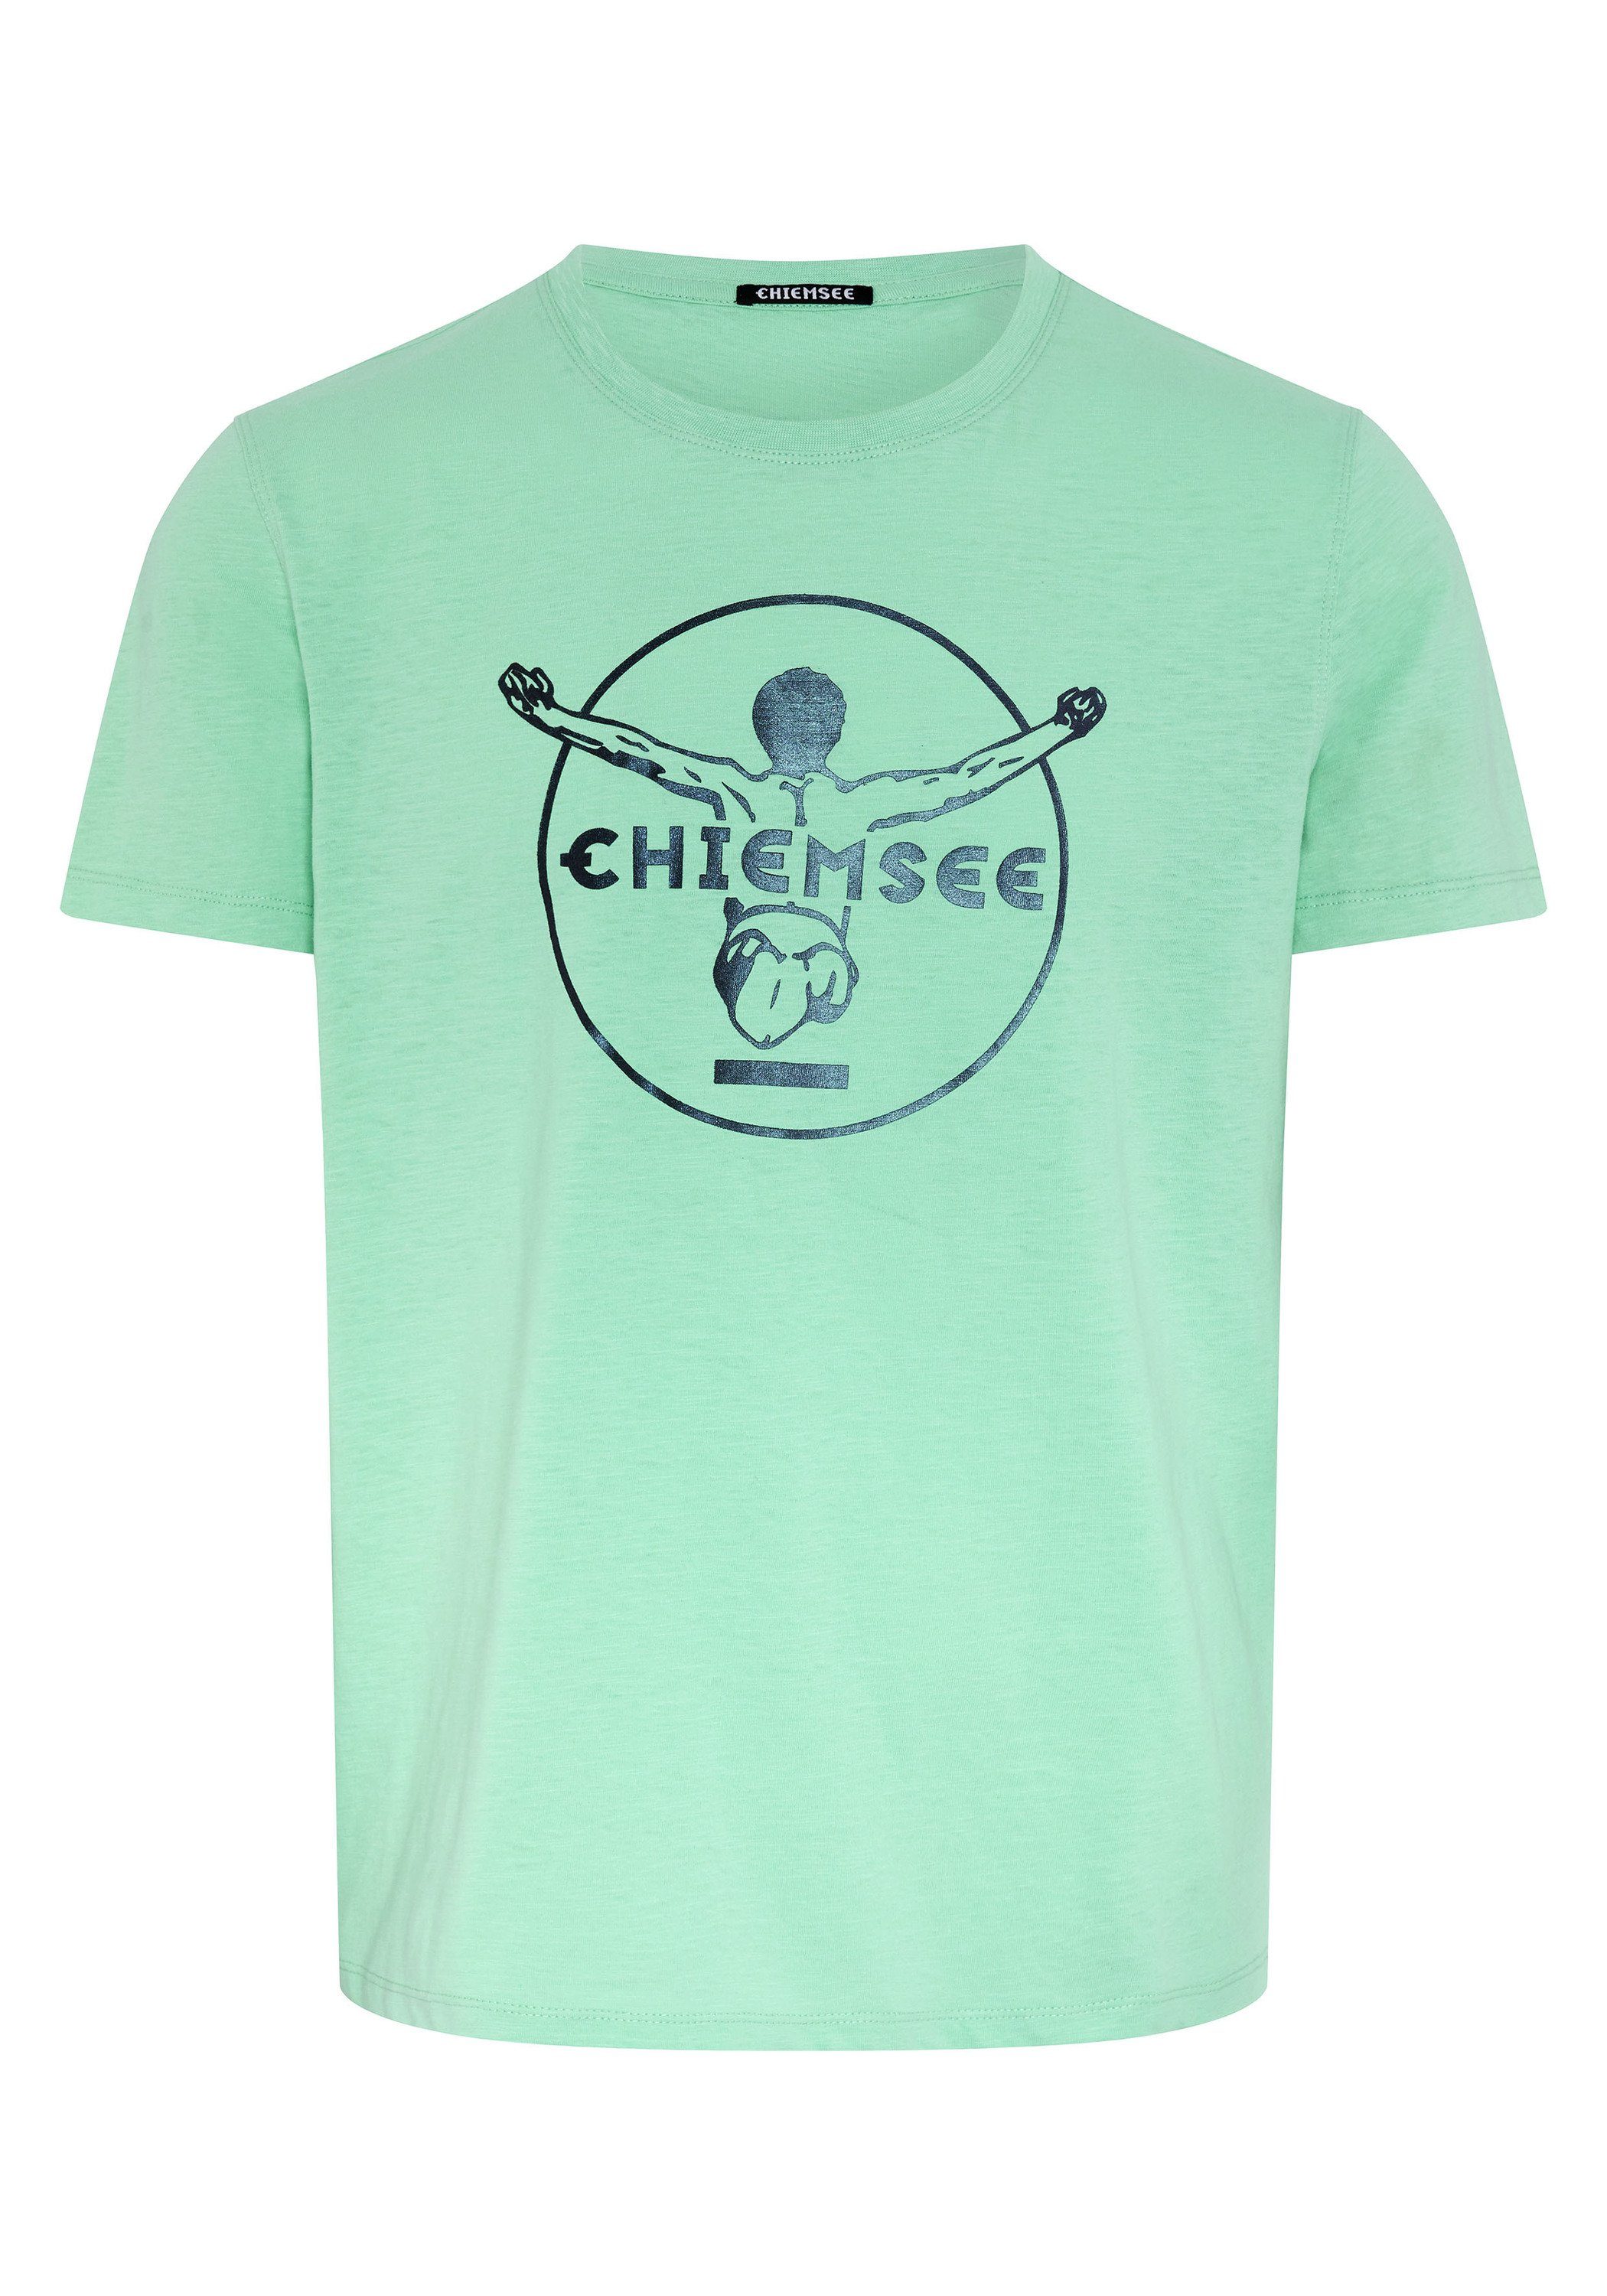 T-Shirt Ocean gedrucktem Label-Symbol mit 1 Print-Shirt Chiemsee Wave